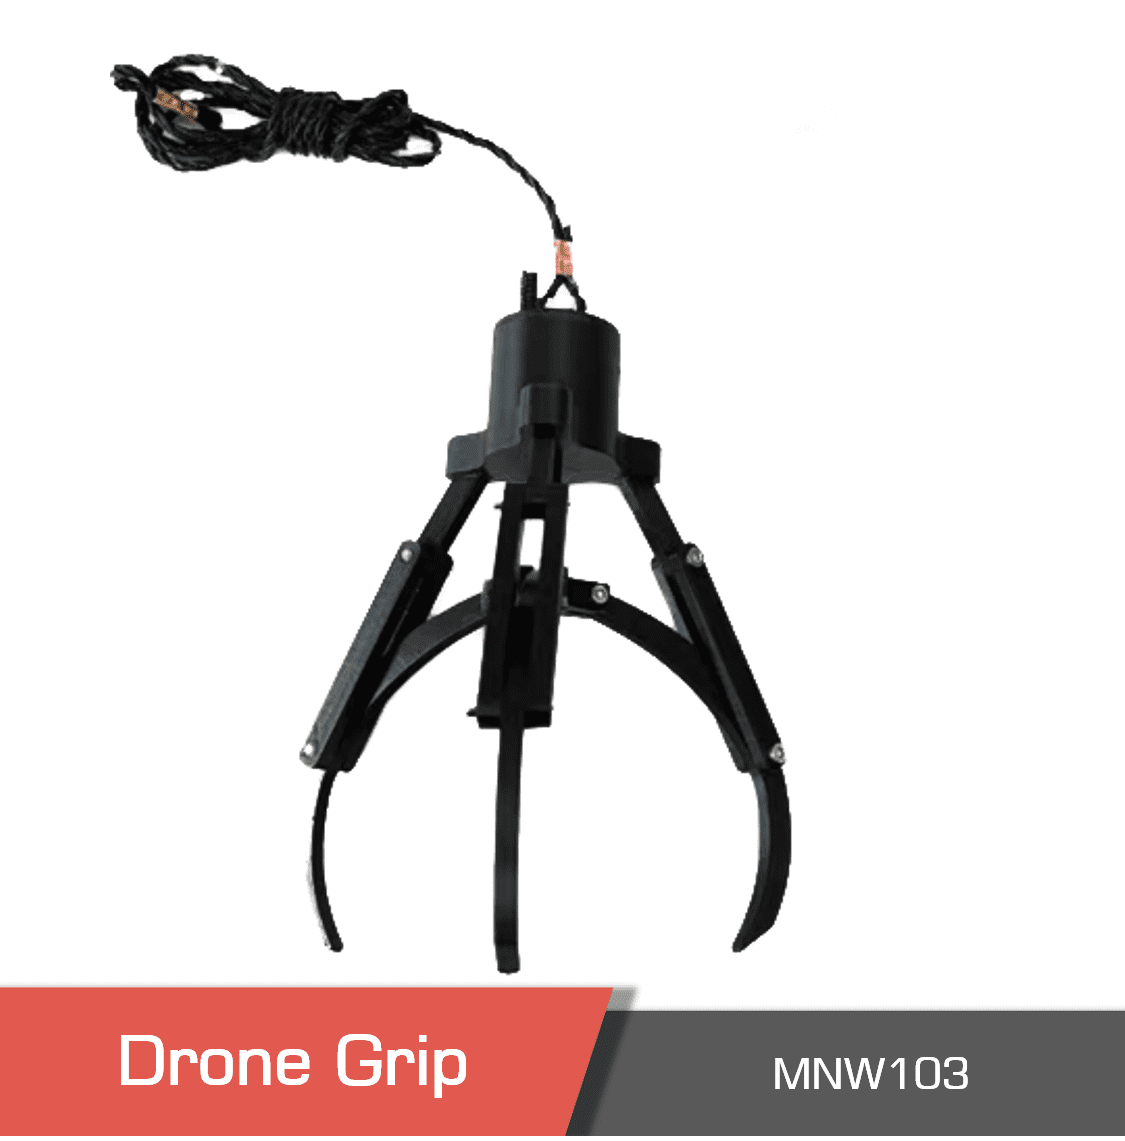 Drone grip mnw103 motionew